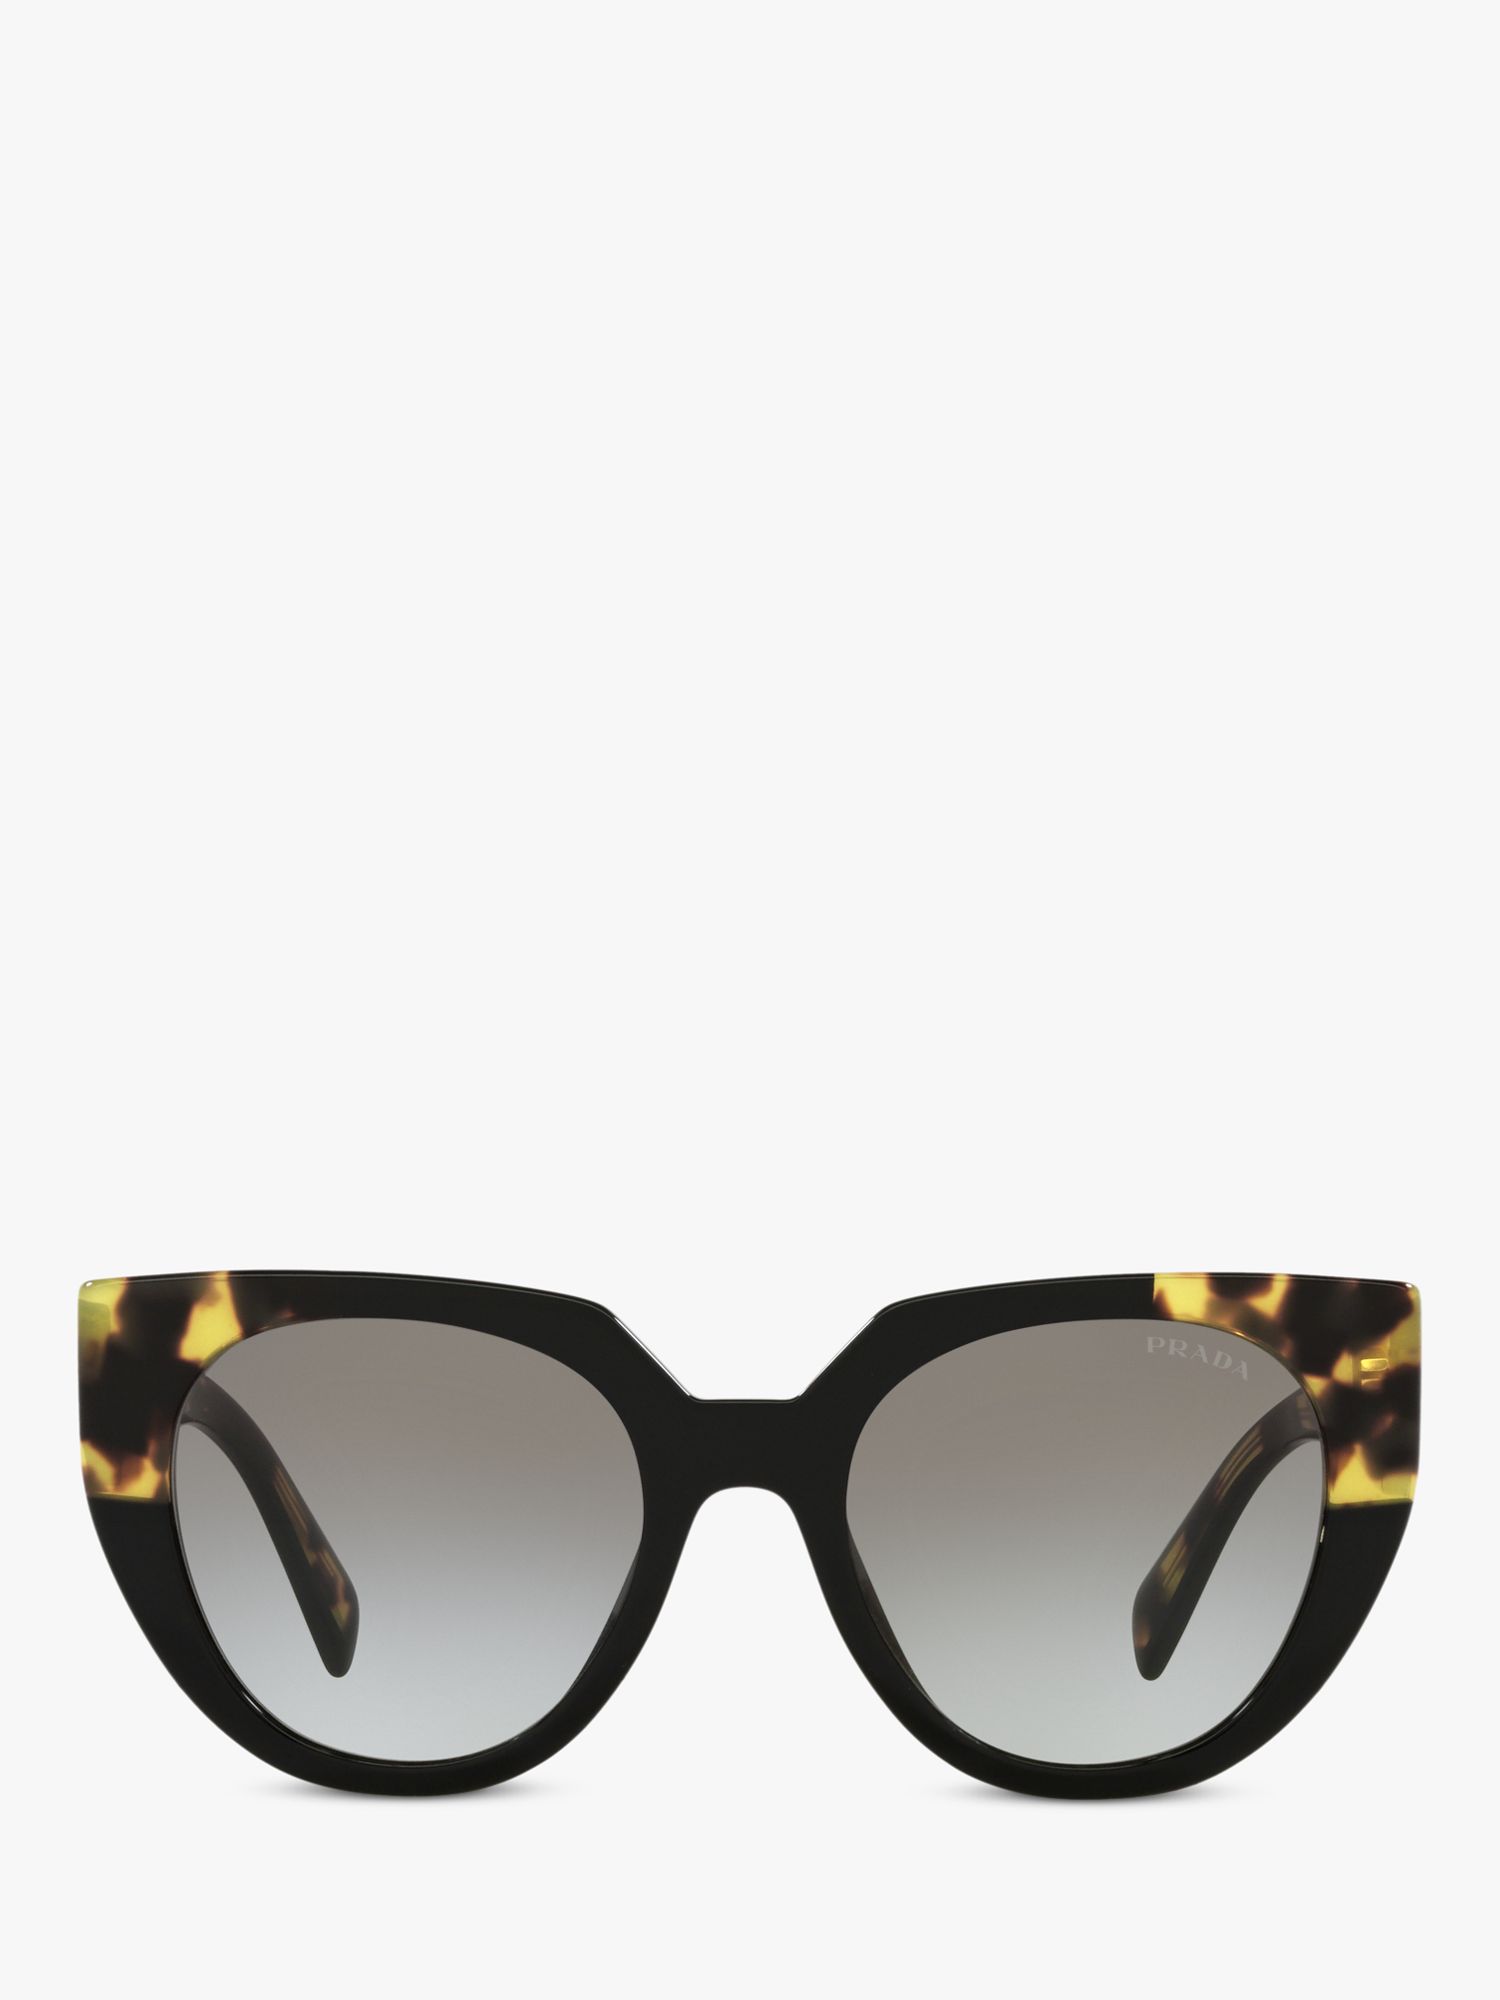 Prada PR 14WS Women's Cat's Eye Sunglasses, Black Medium Tortoise/Grey Gradient